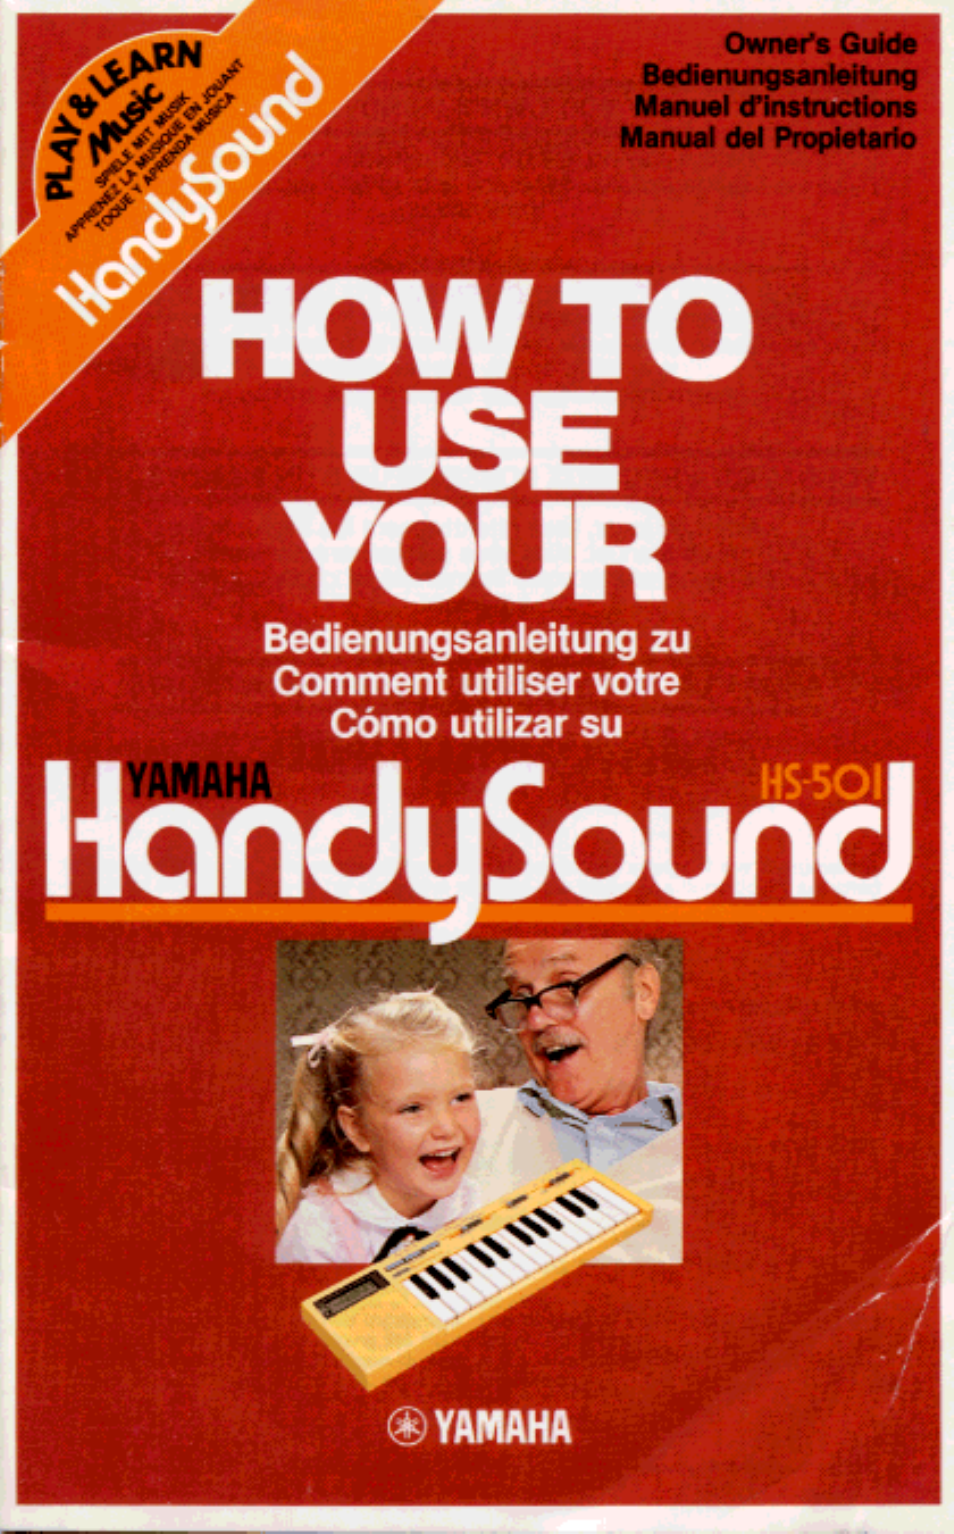 HandySound HS-501